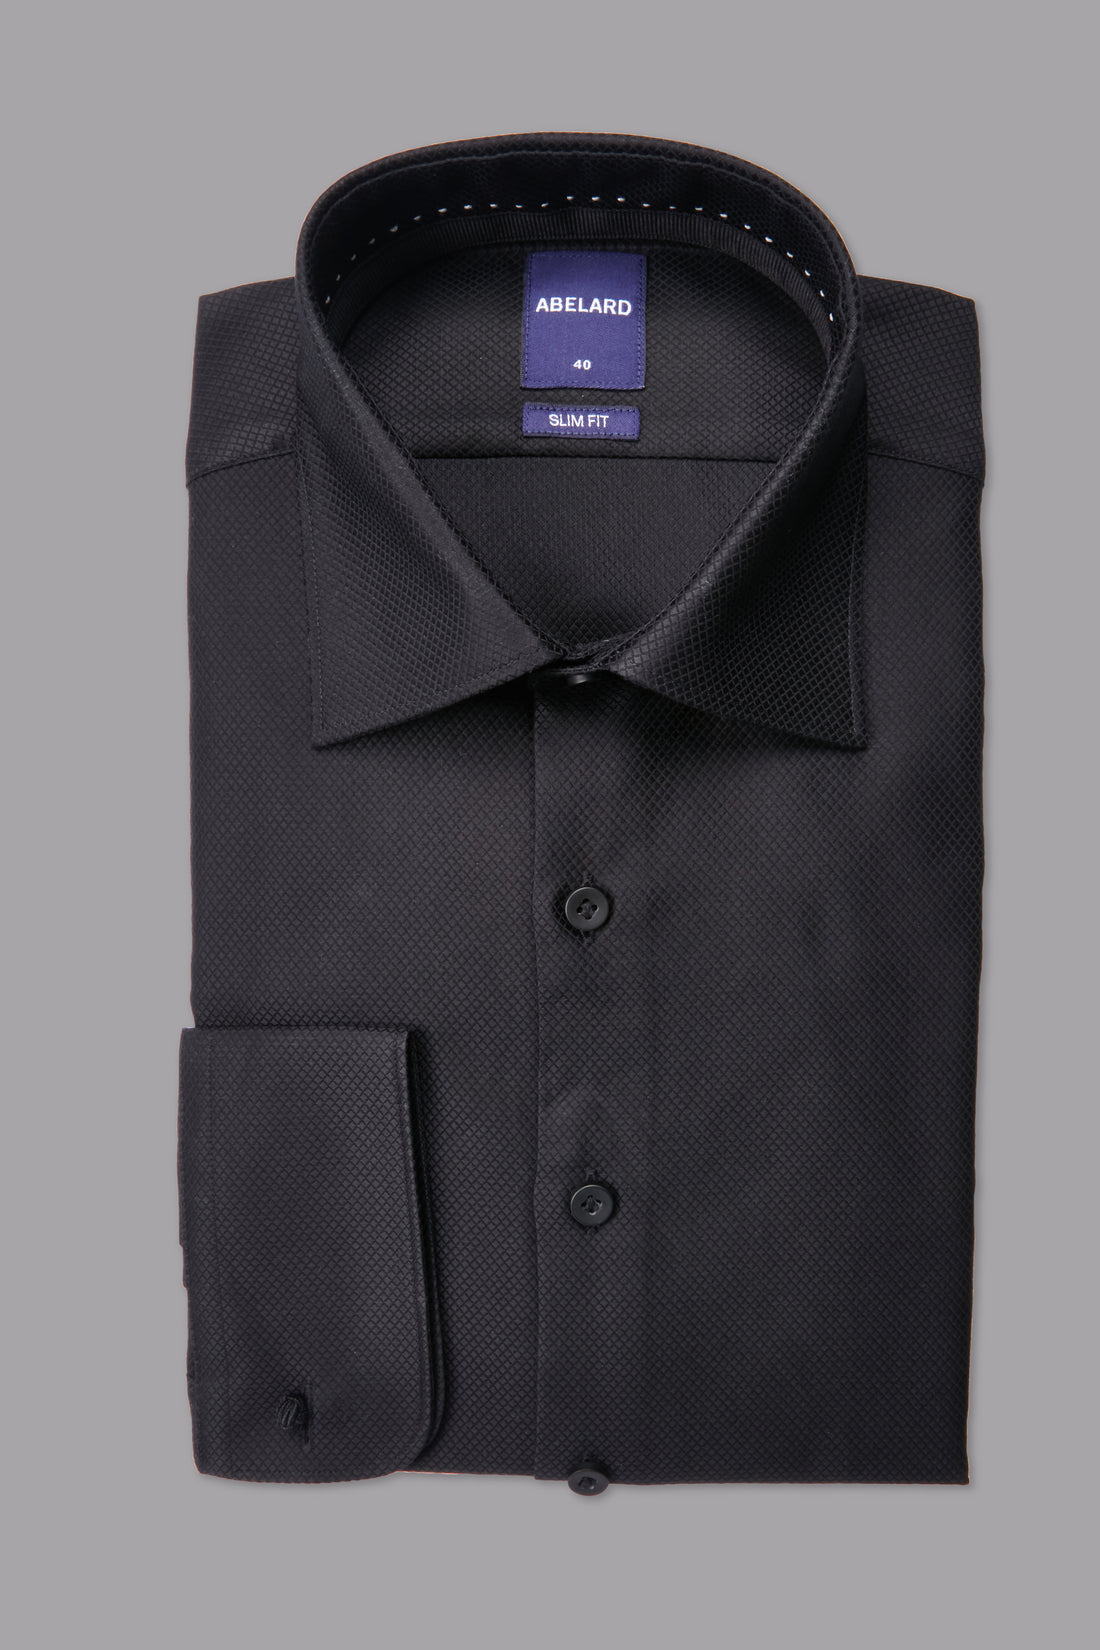 ABELARD Button Evening Shirt Single Cuff Slim Fit BLACK - Henry BucksShirts61SS240139 - BLCK - SC - SLIM - 38